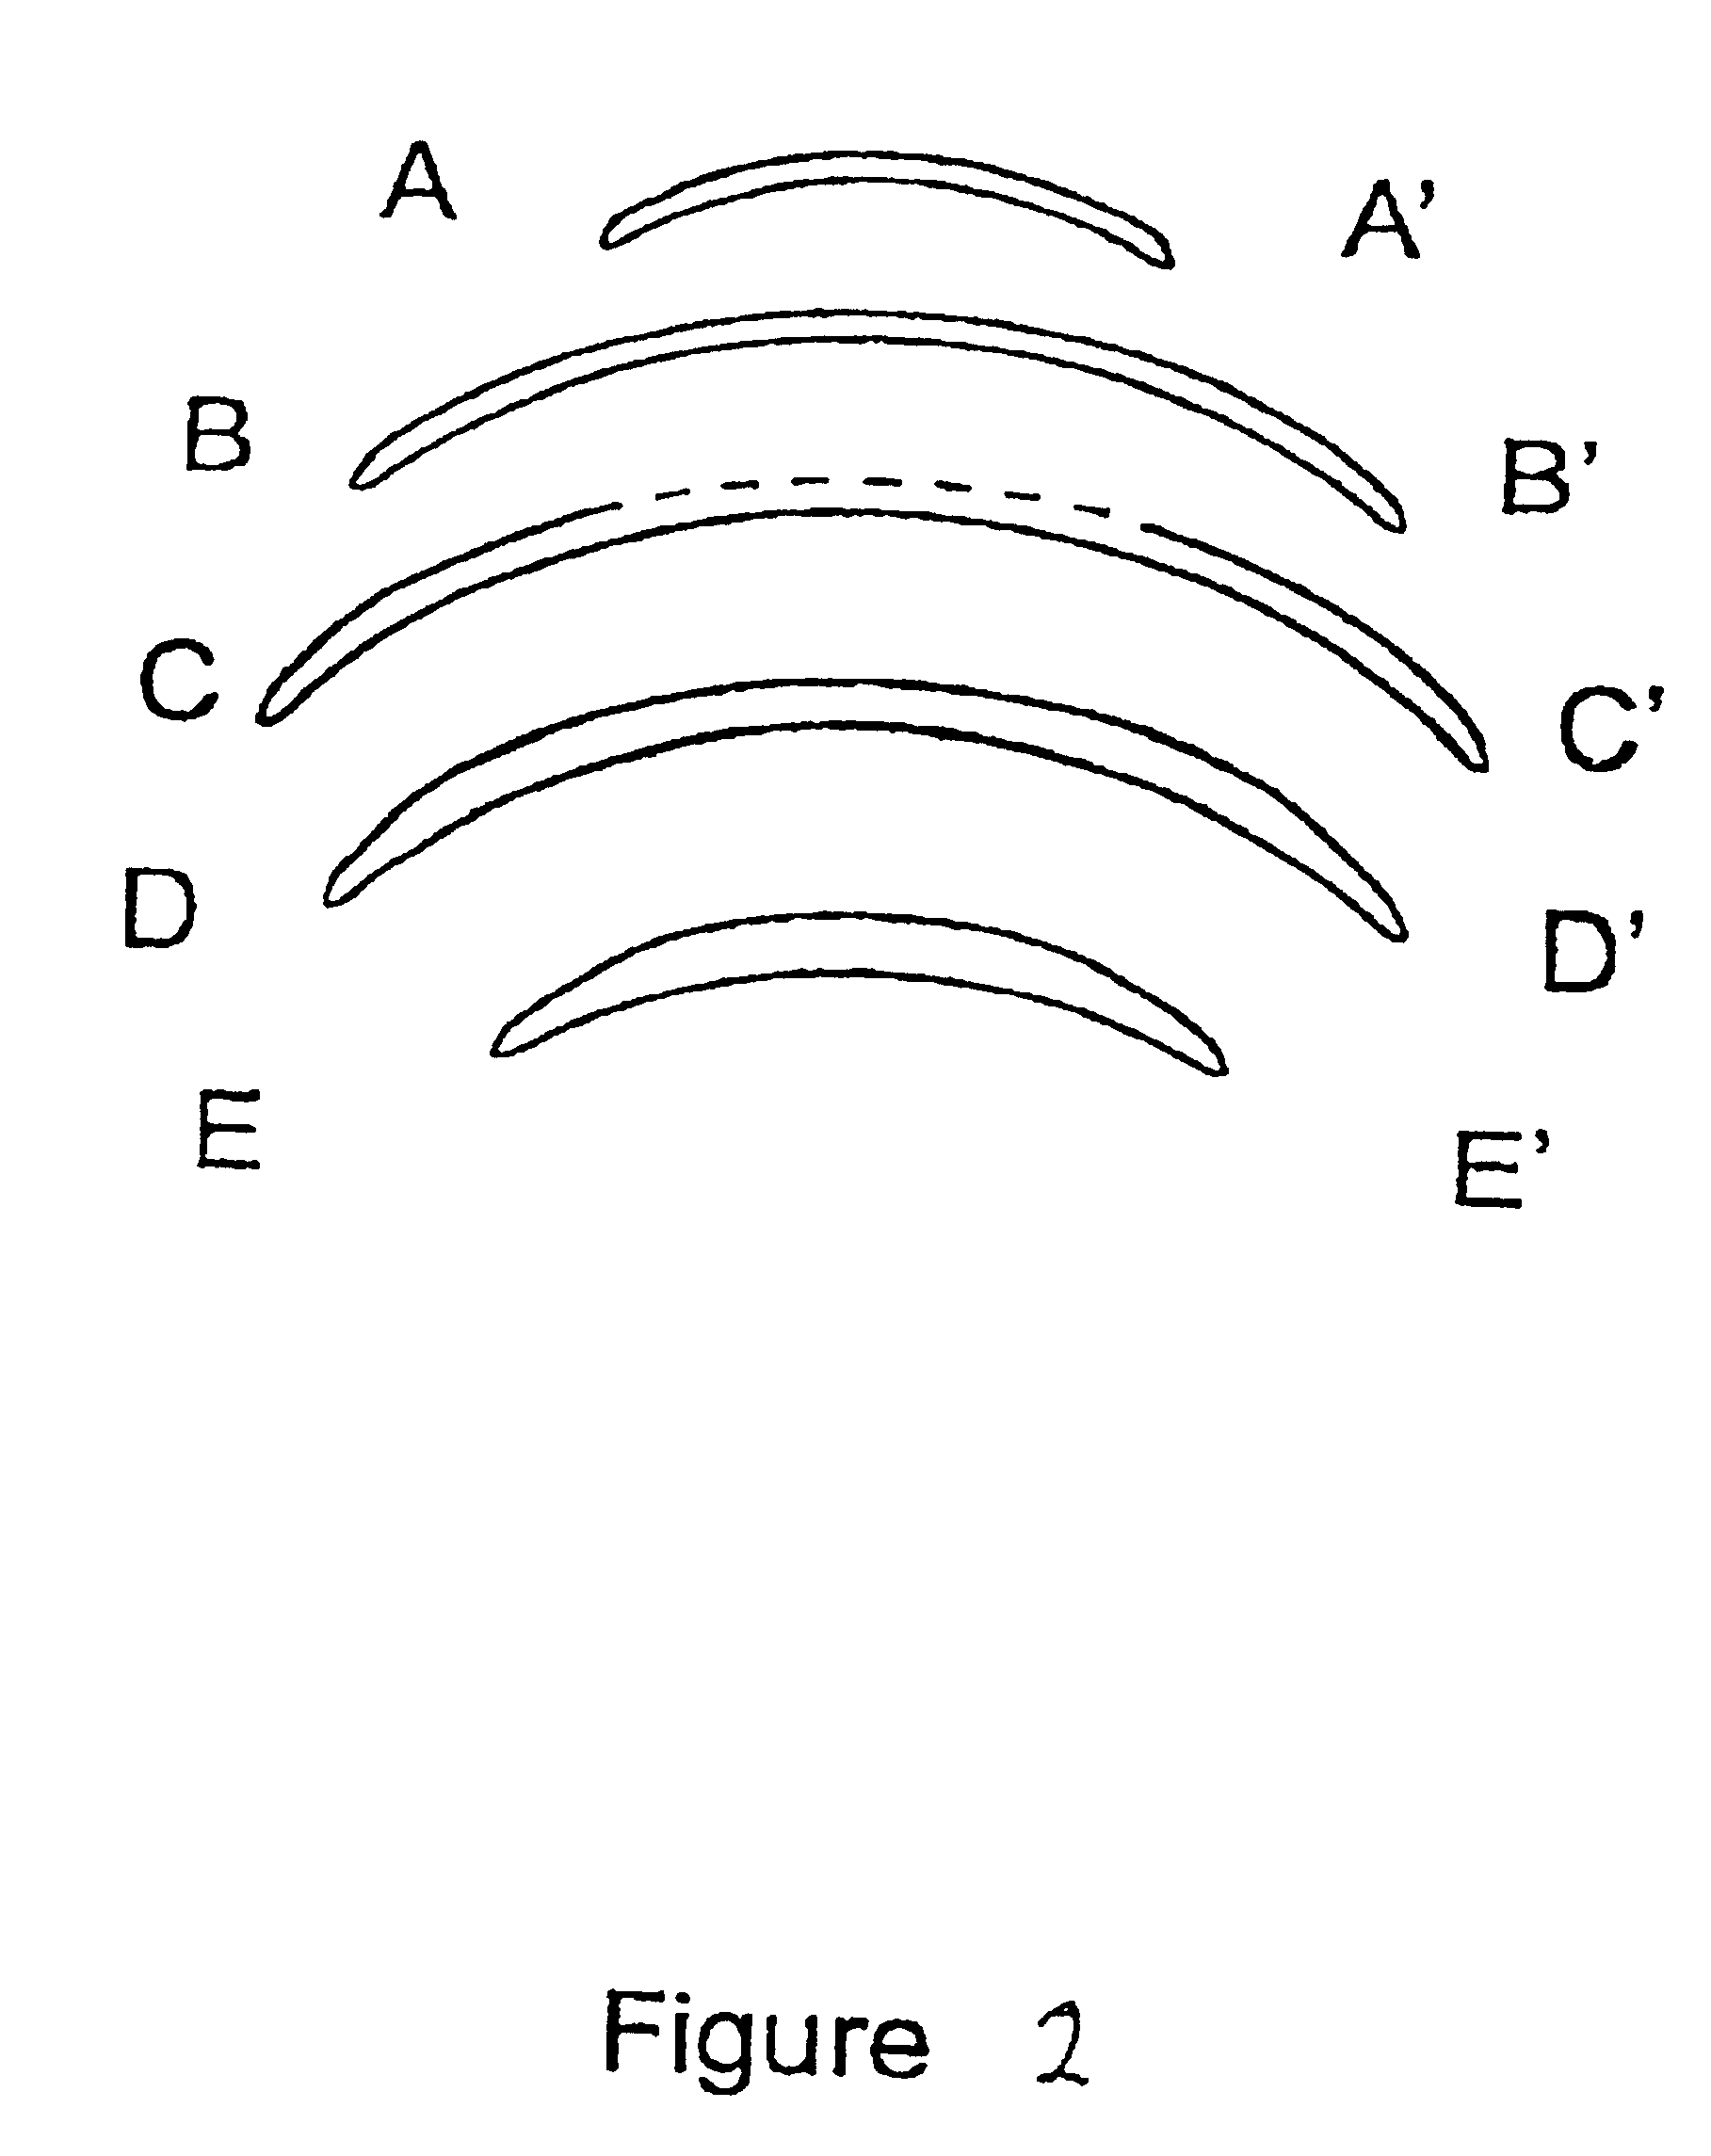 Contact lens having a uniform horizontal thickness profile